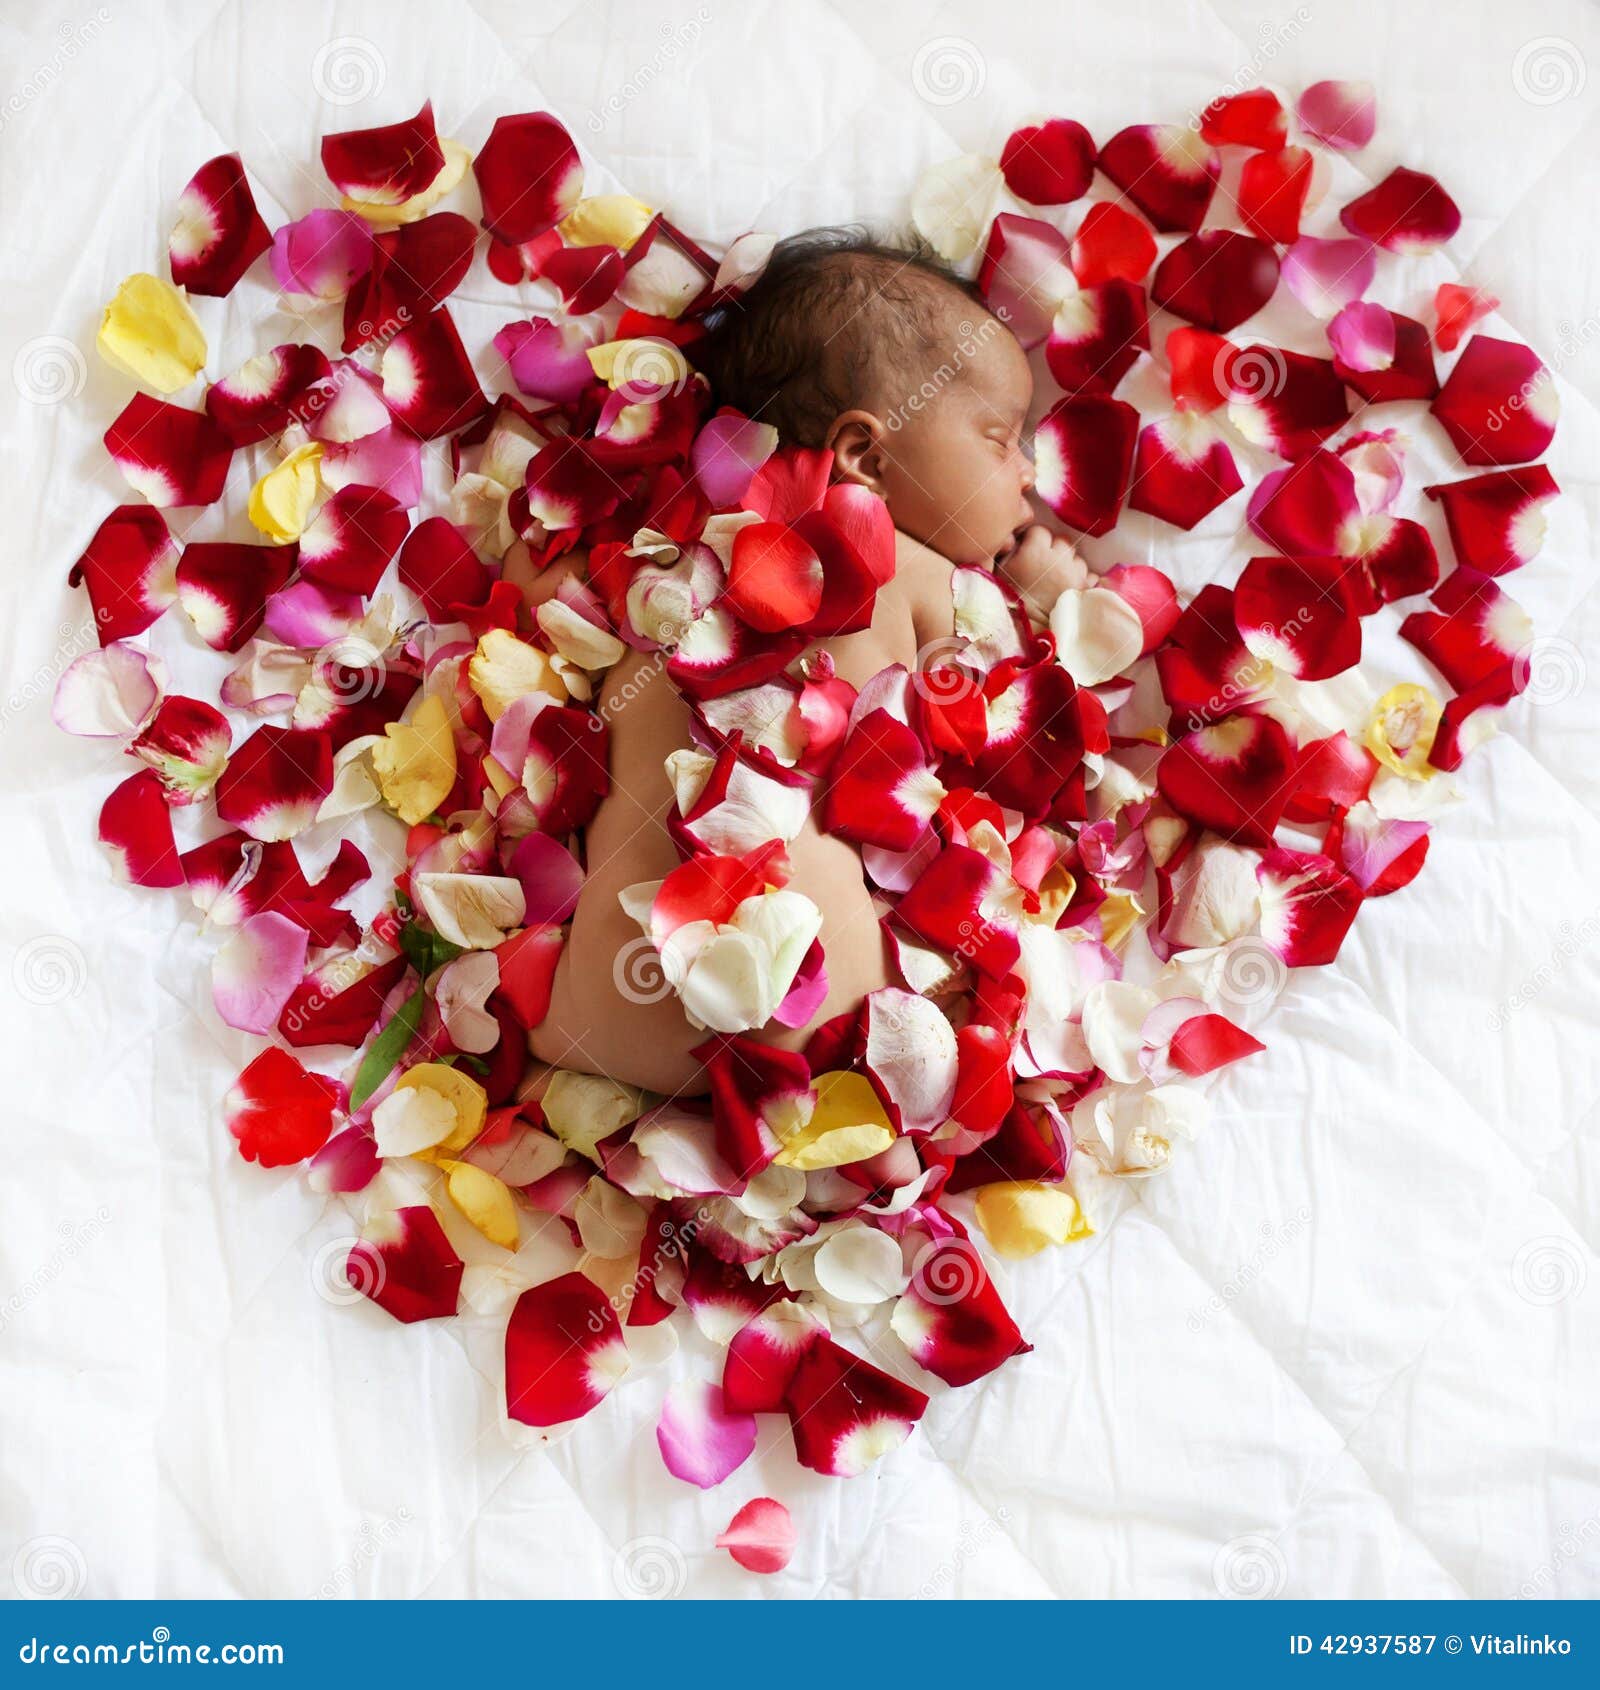 Black Newborn Baby Sleeping In Rose Petals Stock Image Image Of Funny Biracial